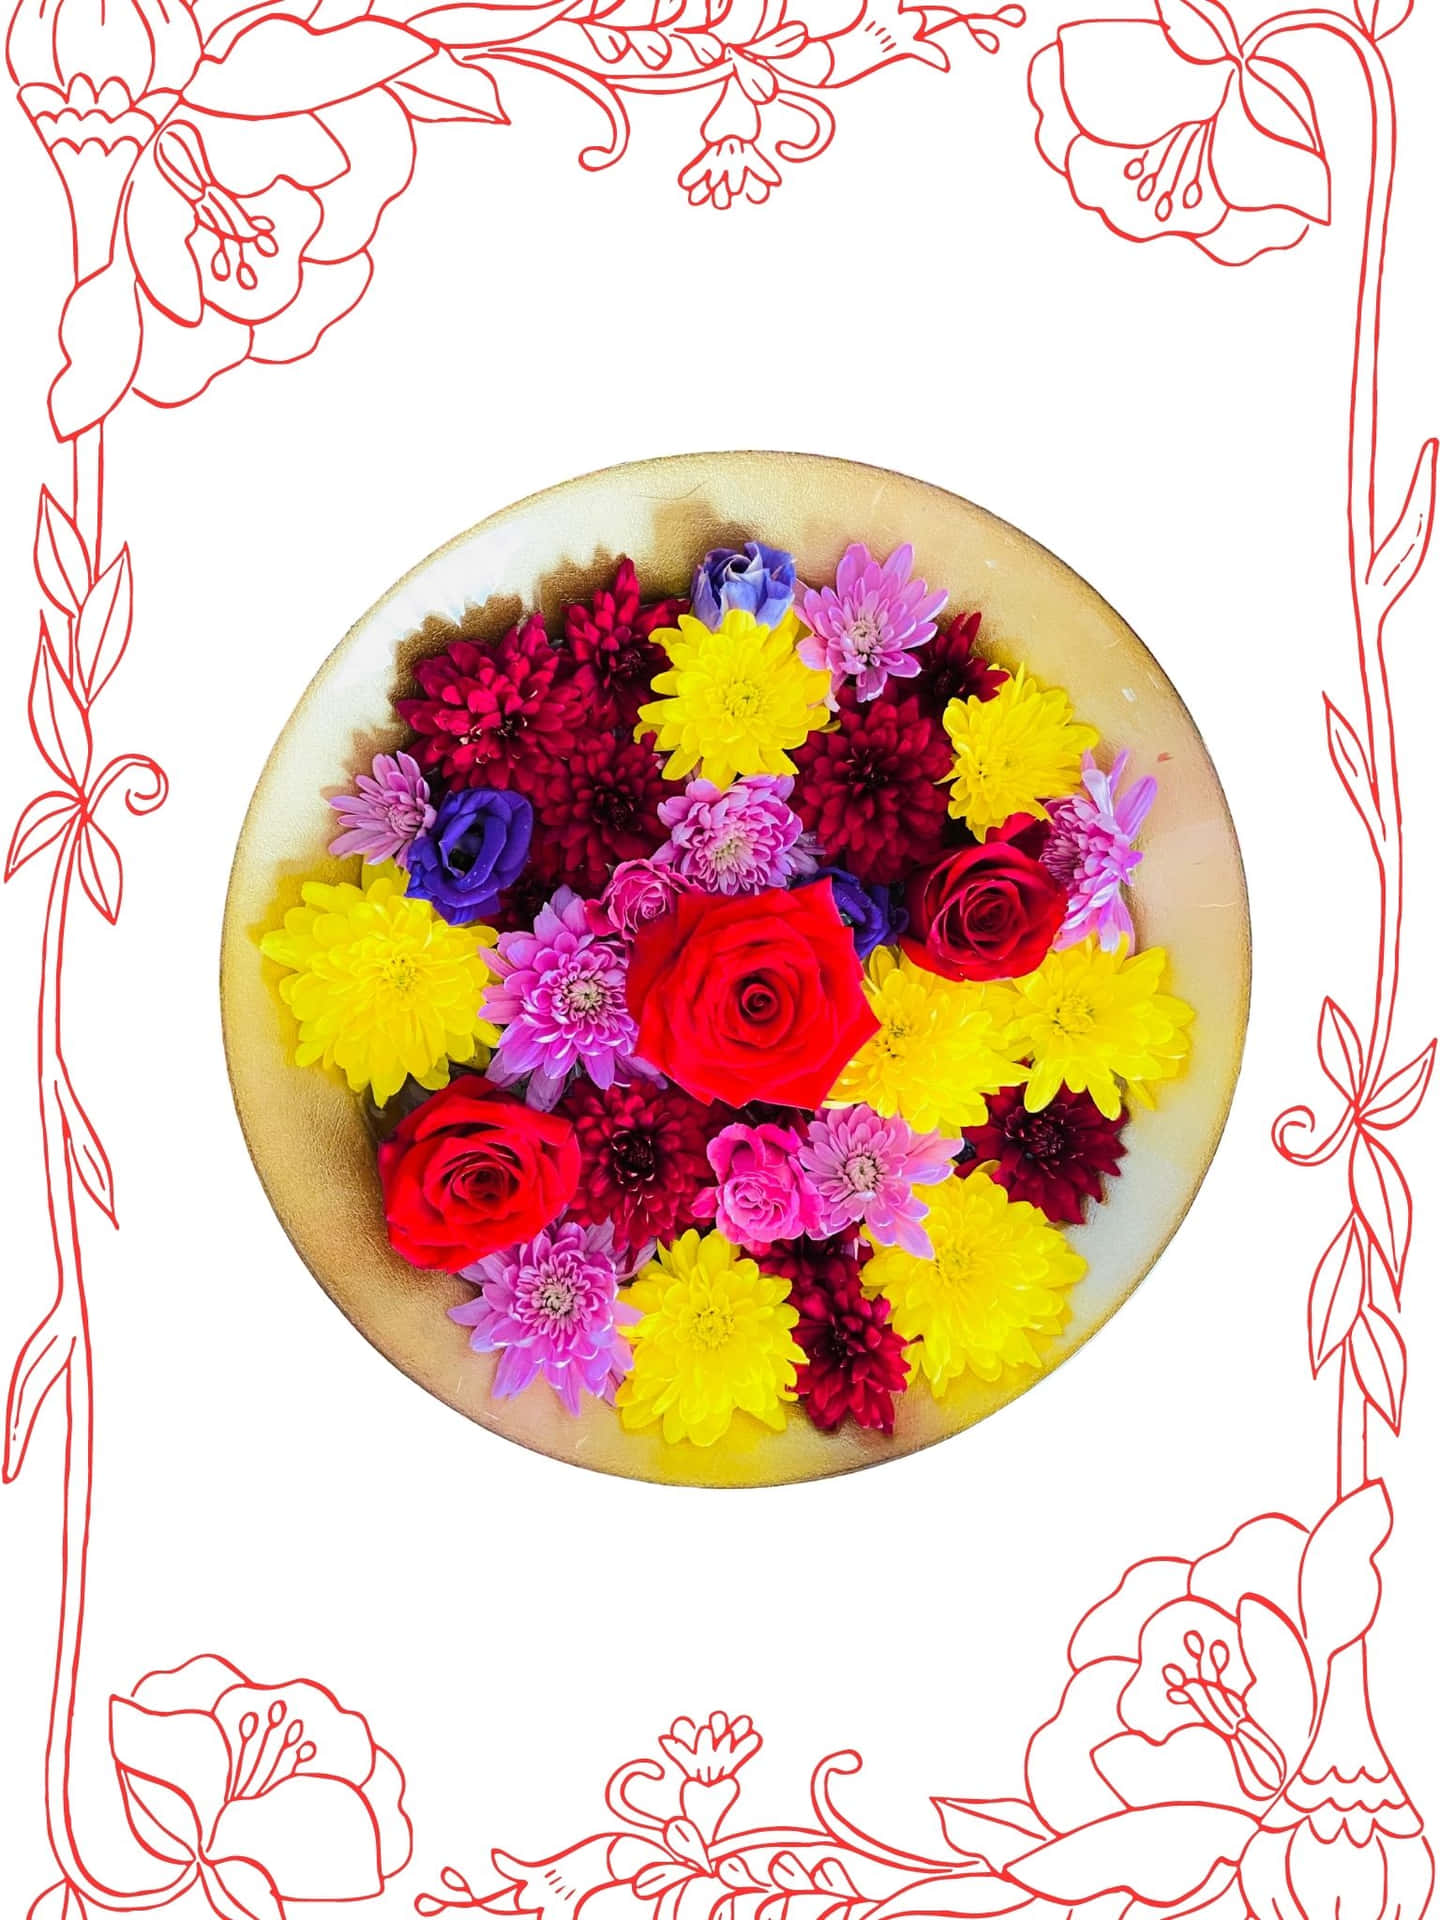 A Flower Arrangement In A Bowl Background